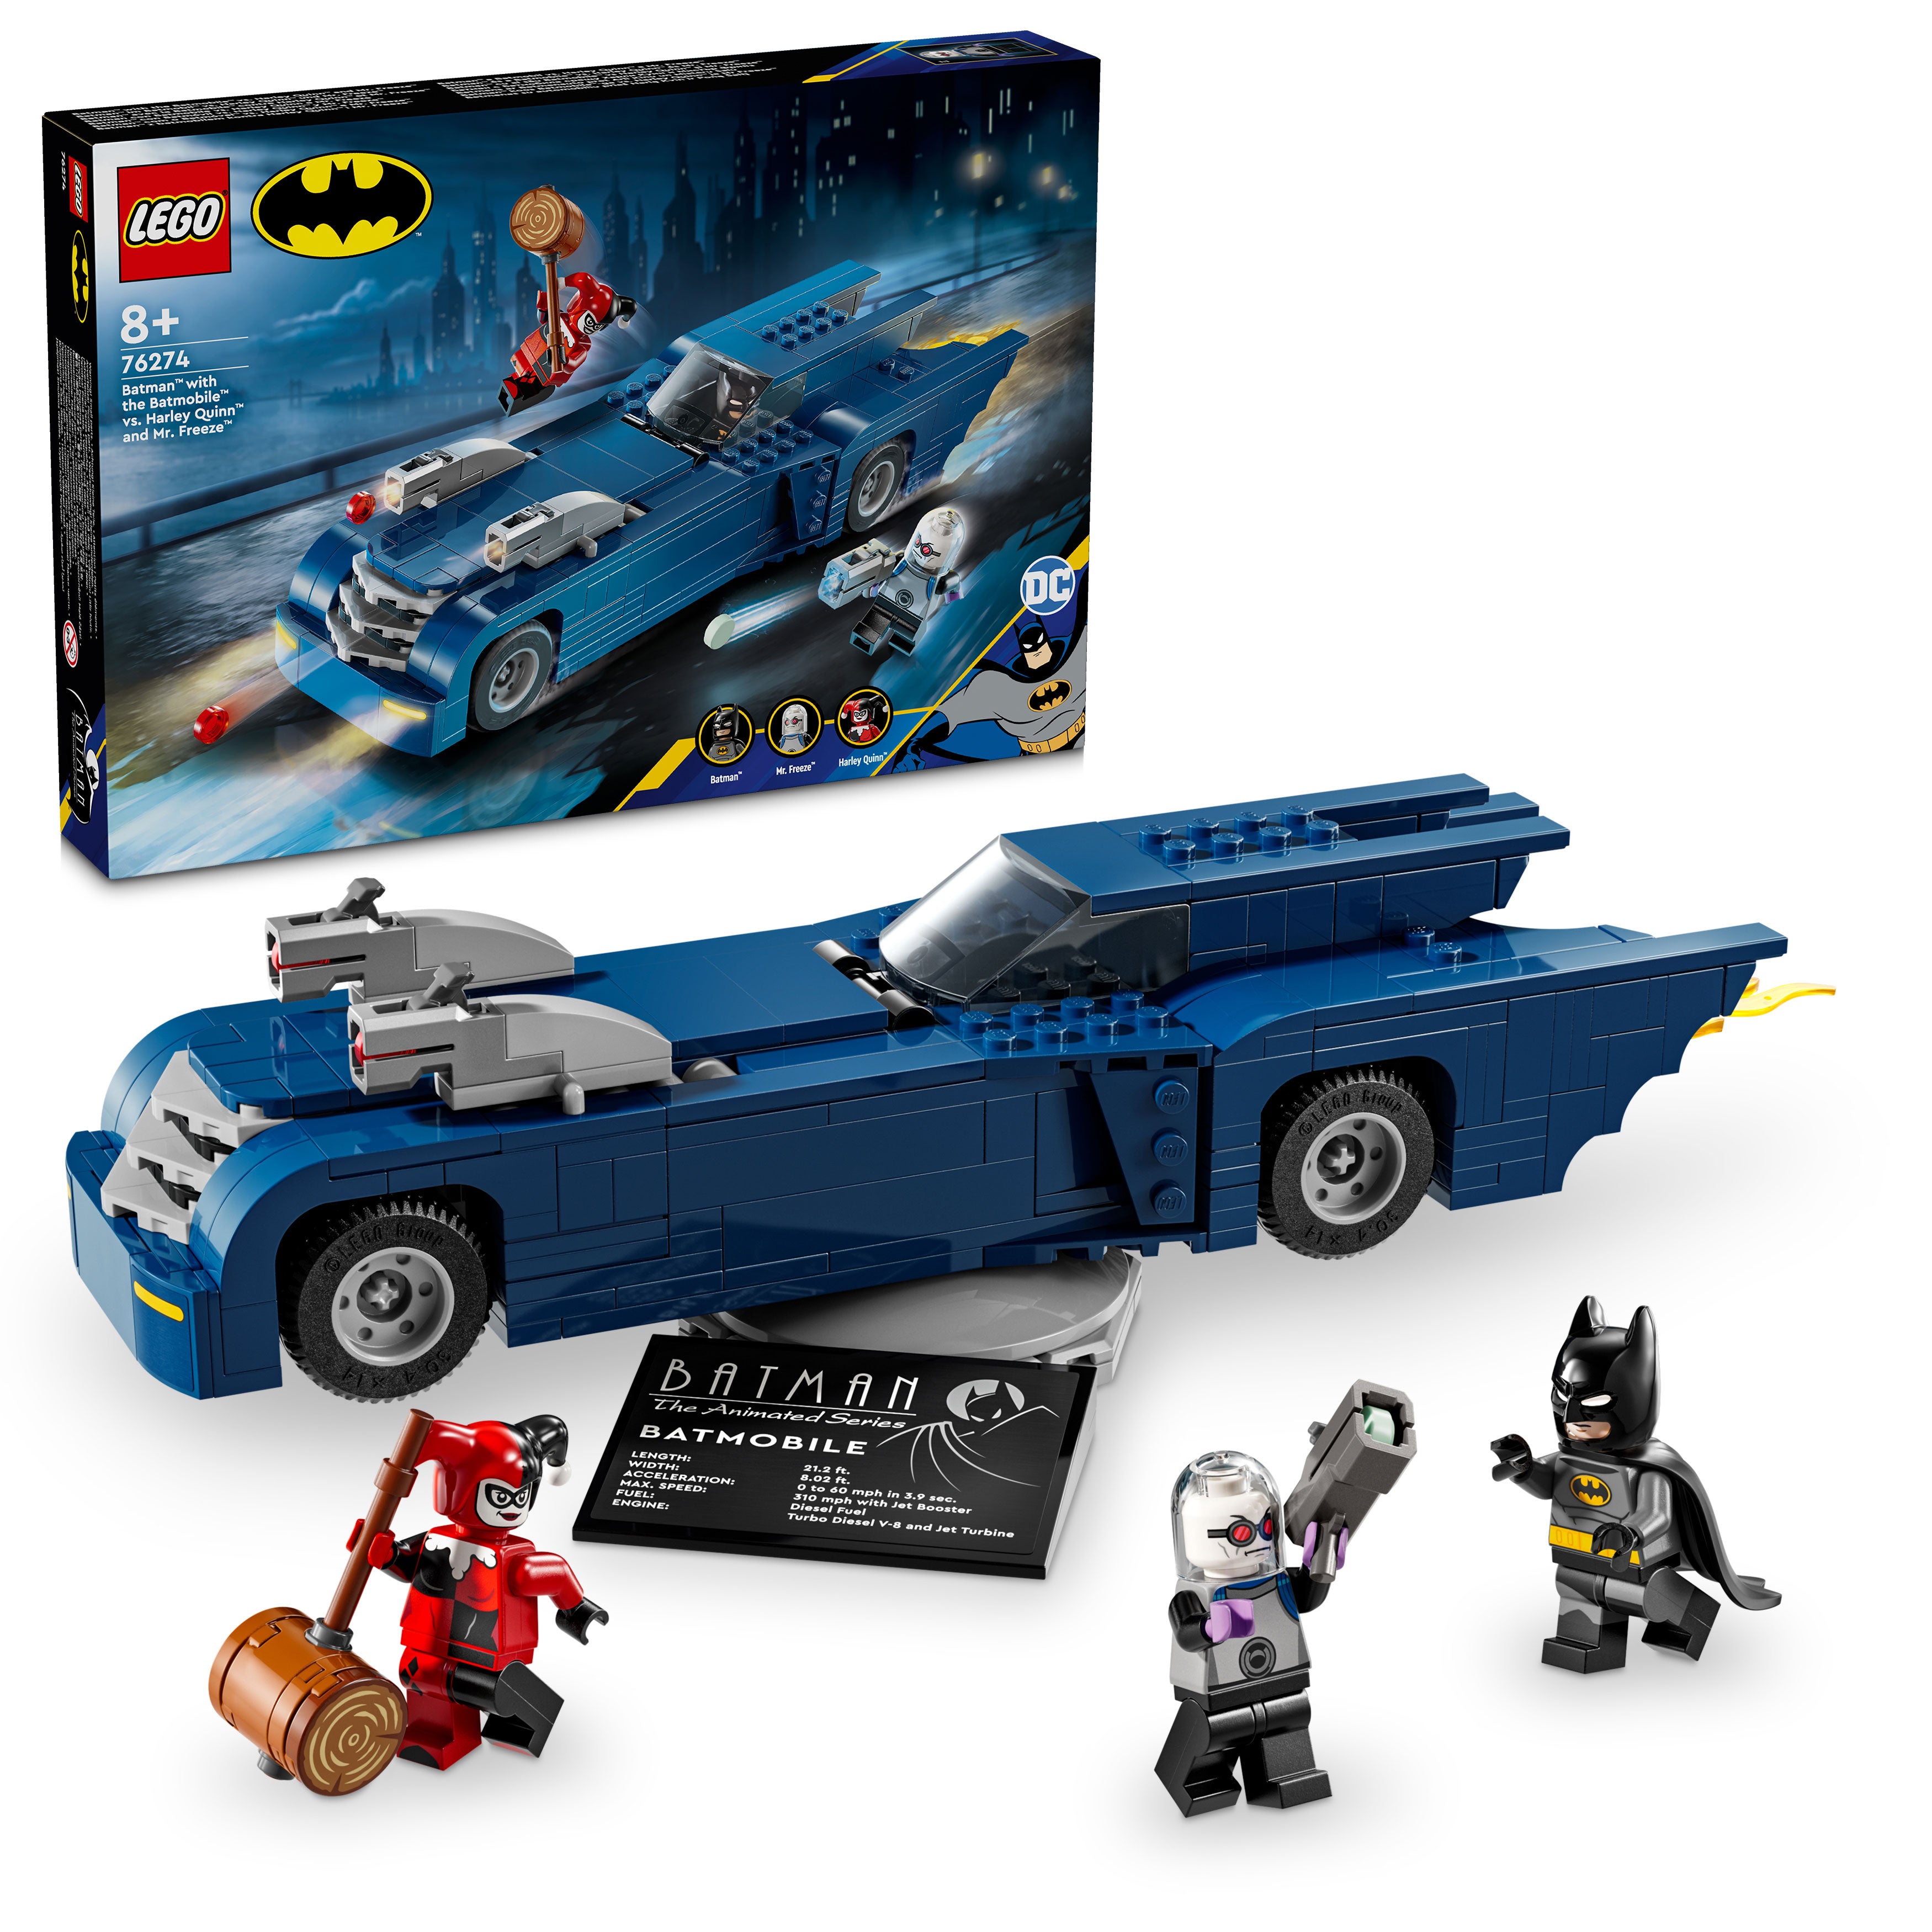 Lego 76274 Batman with the Batmobile